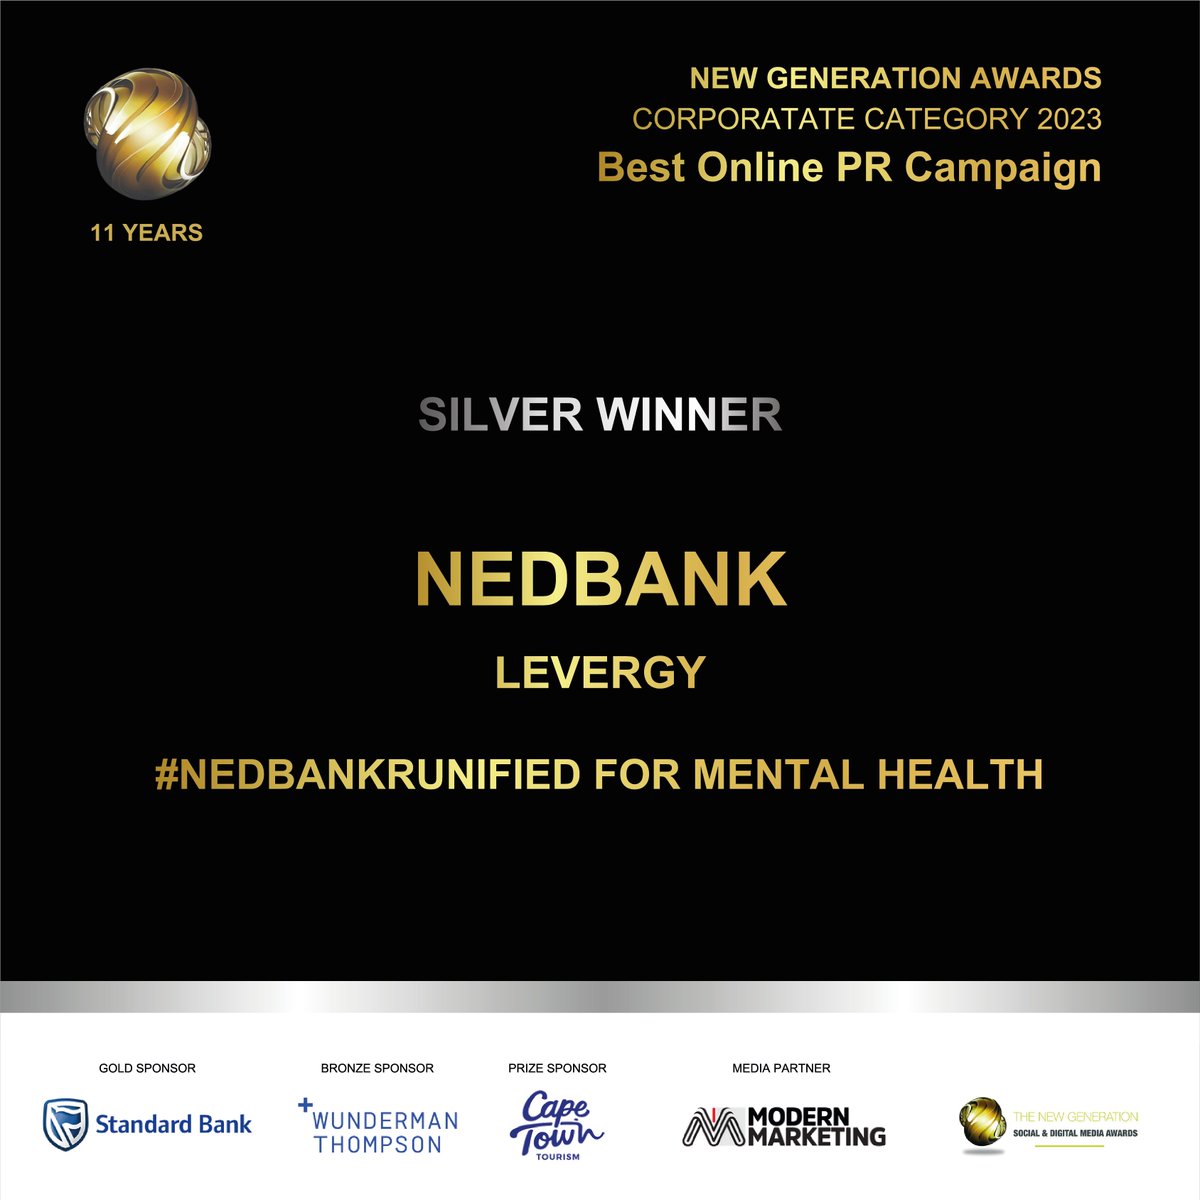 Category: Best Online PR Campaign Winner: @Nedbank @levergy_sa Award: Silver Great Job Team! #newgenawards